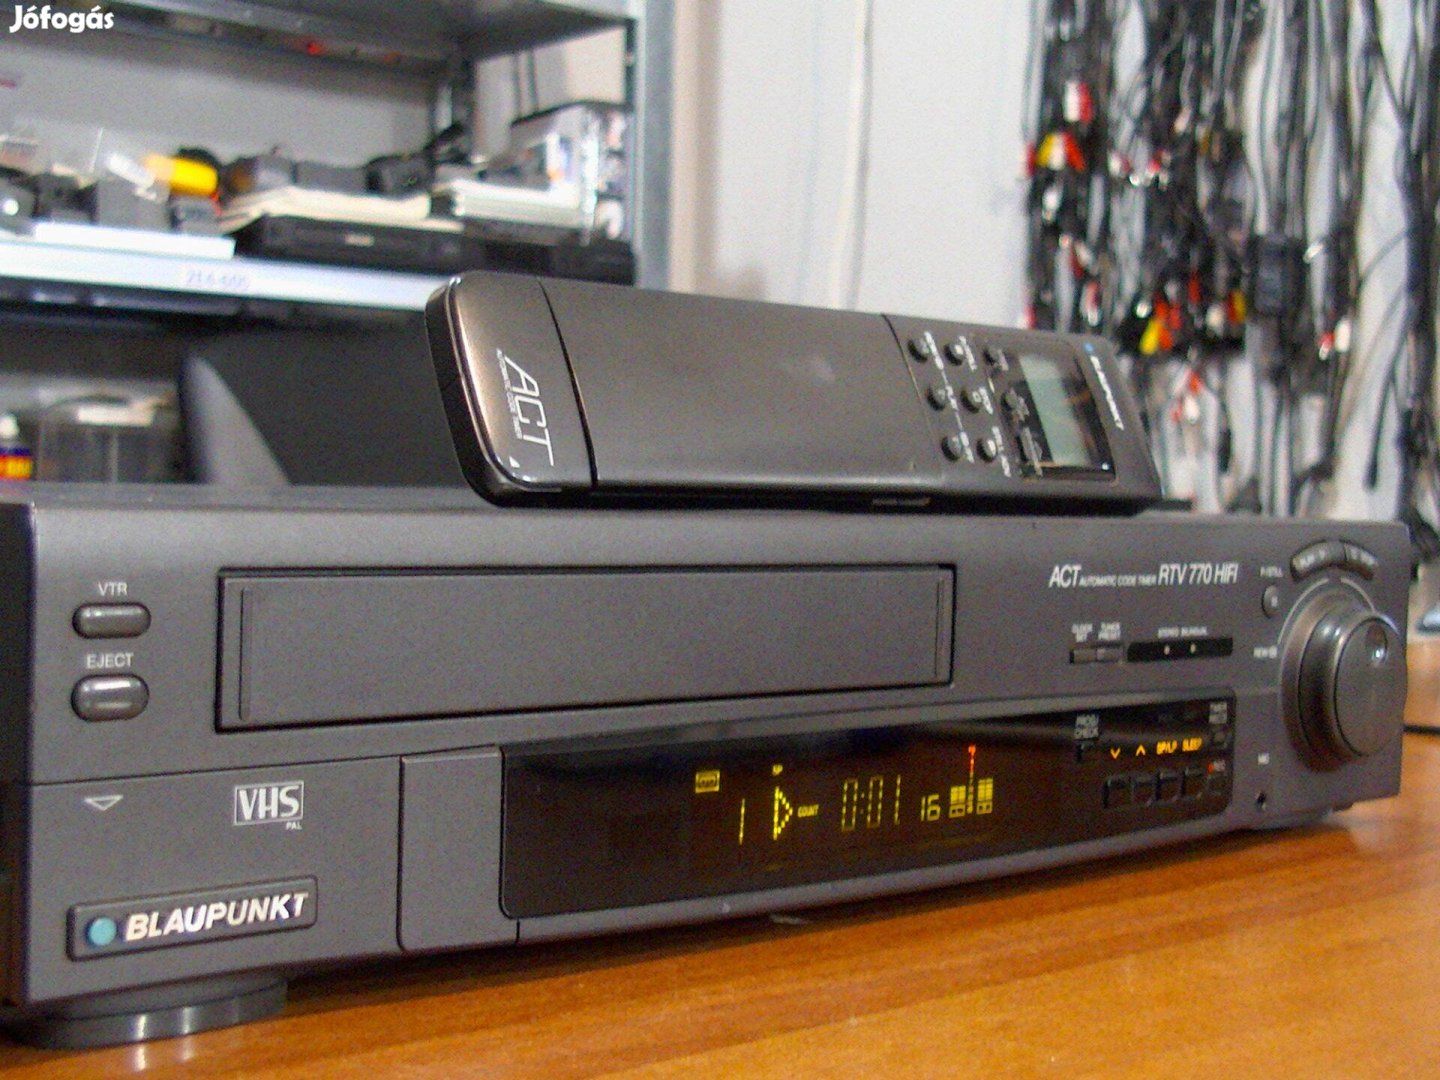 Blaupunkt RTV-777 HiFi Stereo VHS Recorder